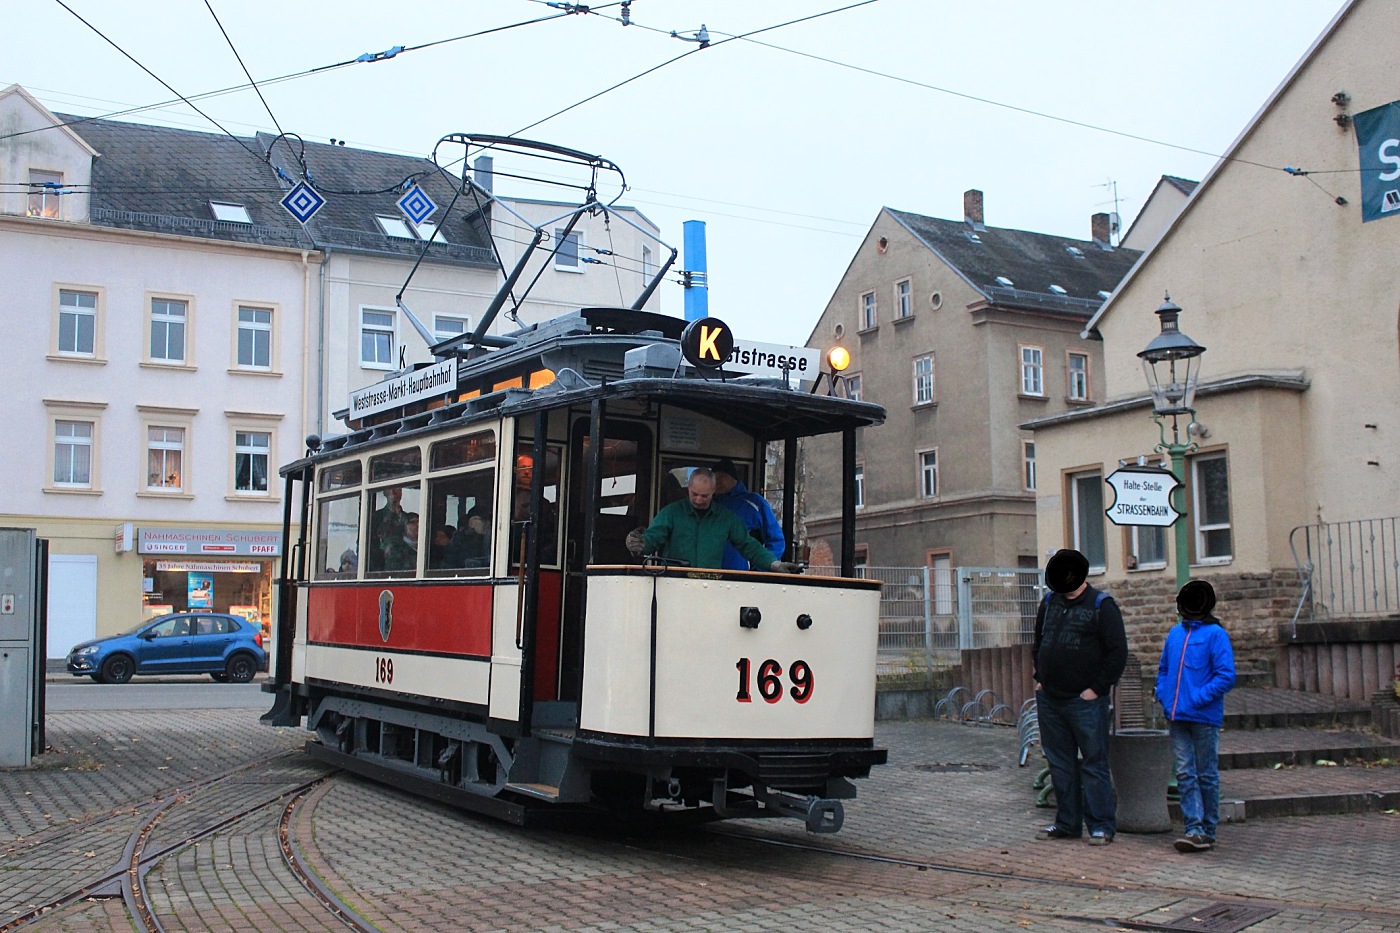 Miscellaneous 2-axle tram #169